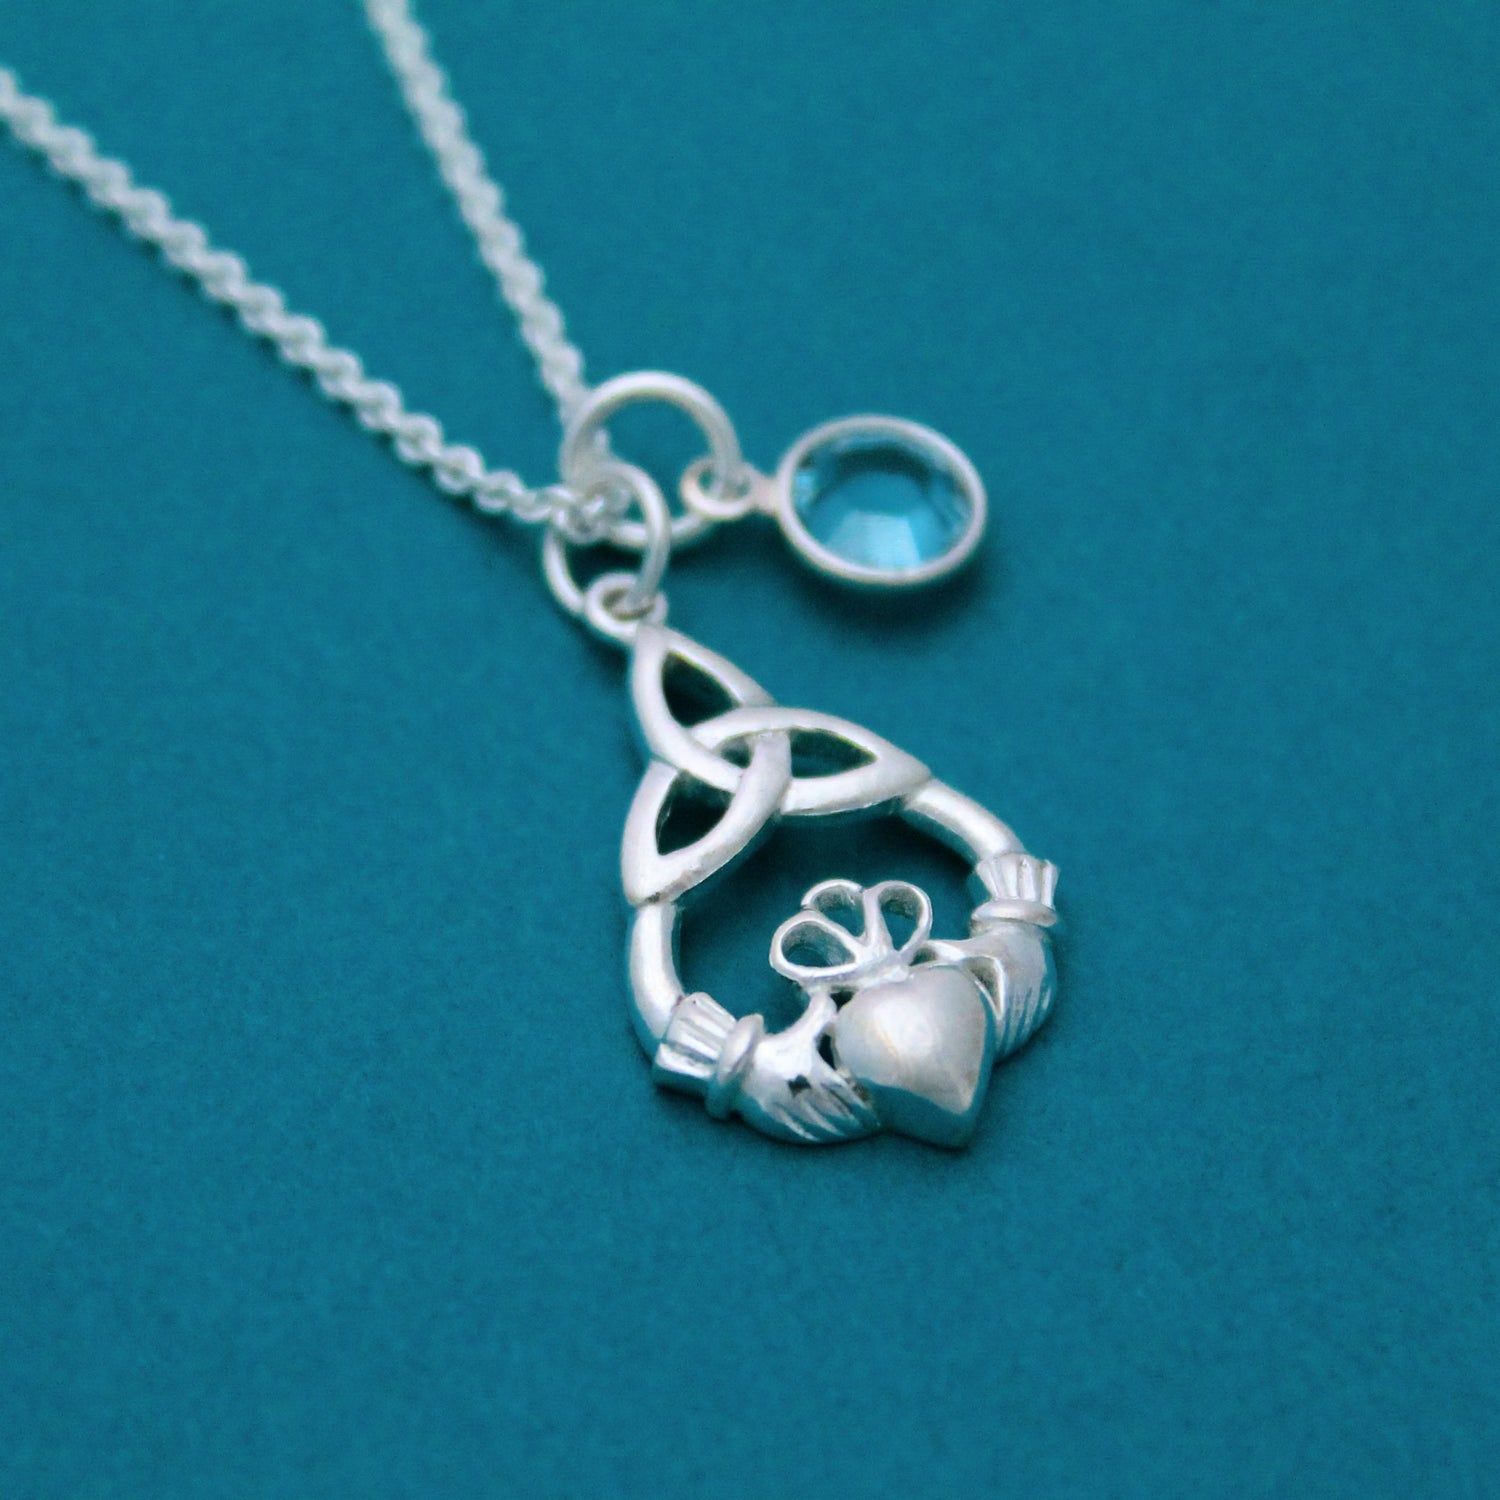 Claddagh Birthstone Necklace, Claddagh Gift, Claddagh Irish Necklace, Celtic Jewelry, Best Friend, Anniversary Necklace, Claddagh Necklace